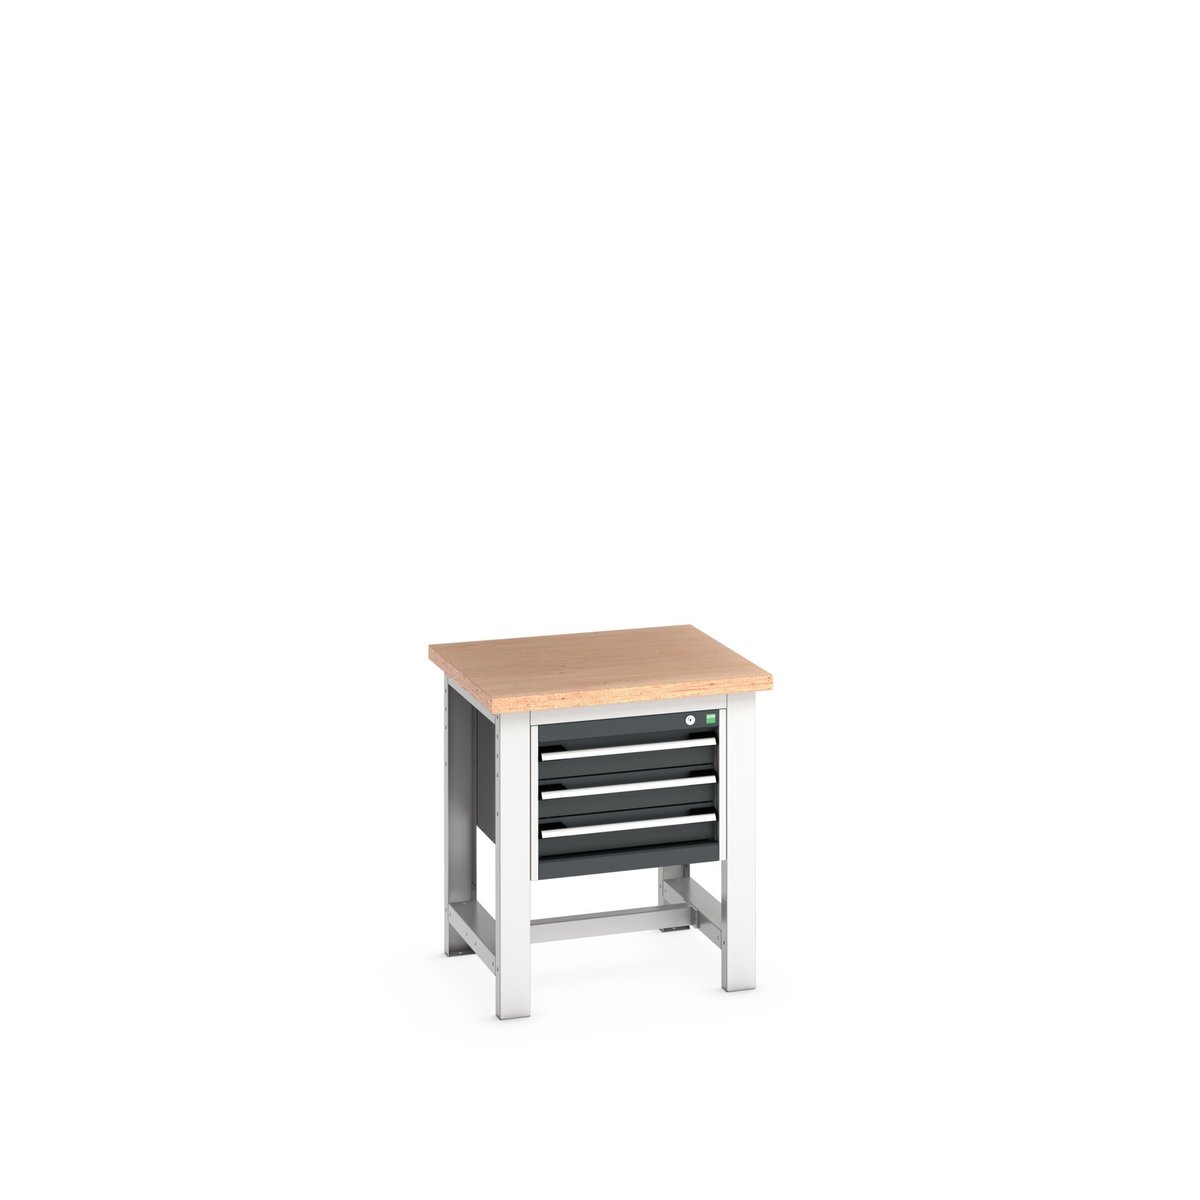 41003524. - cubio framework bench (mpx)